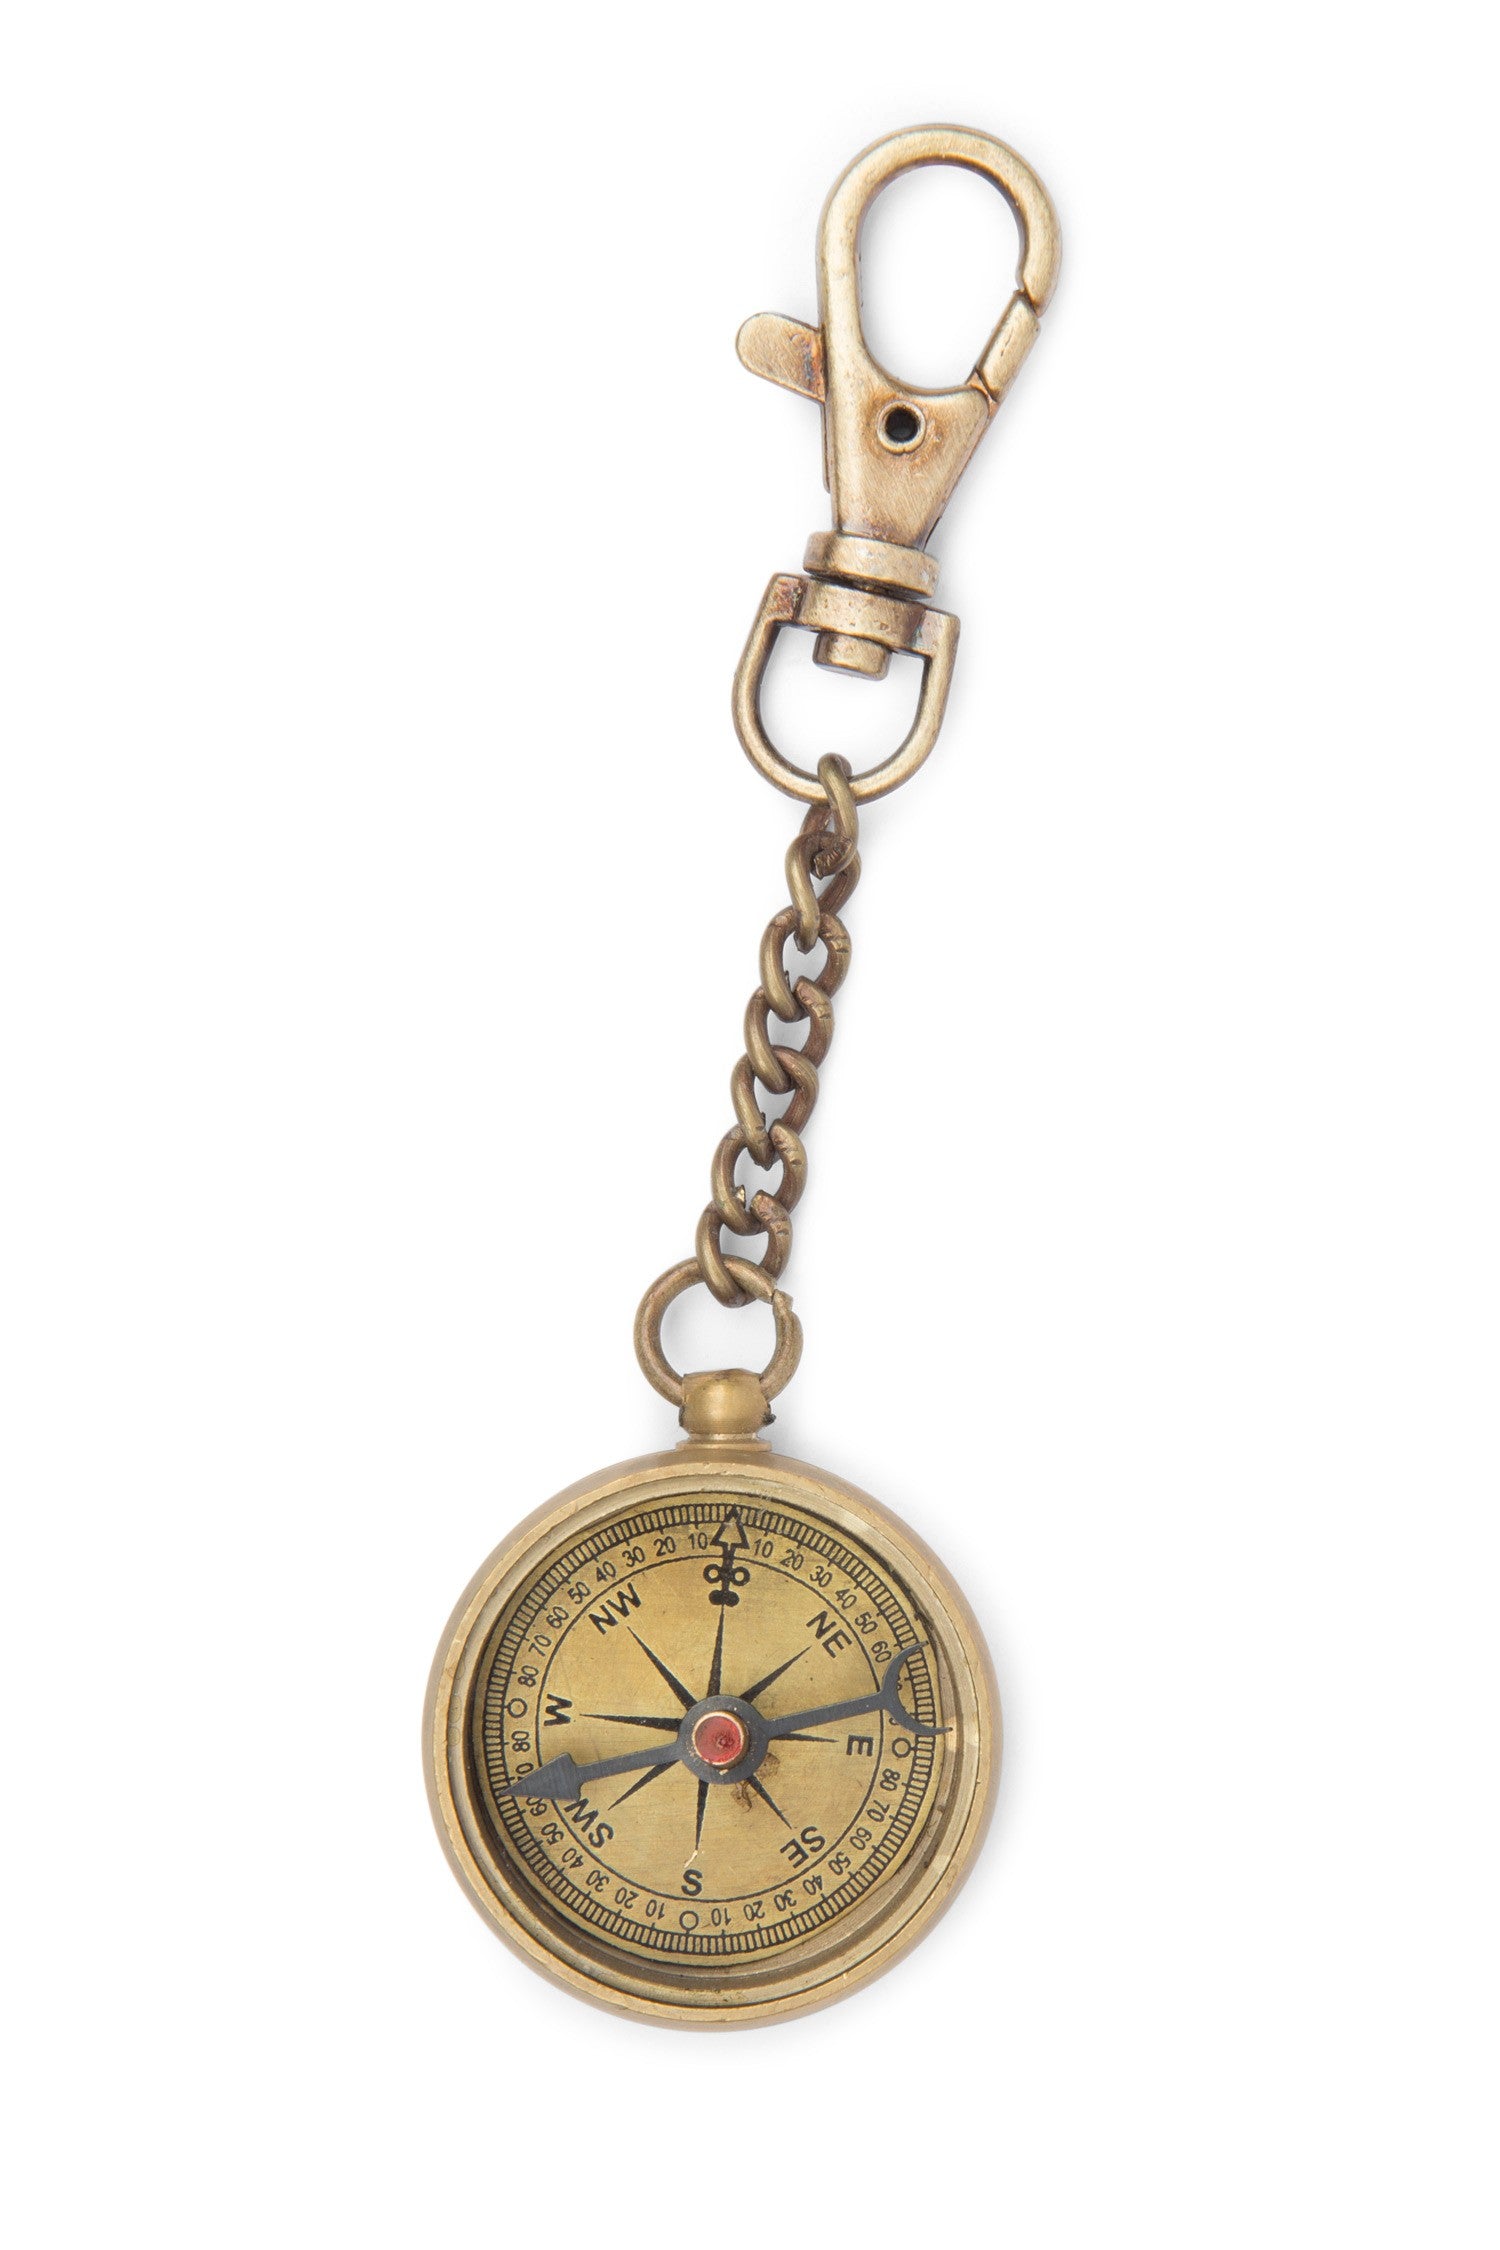 Brass Pocket Compass, India